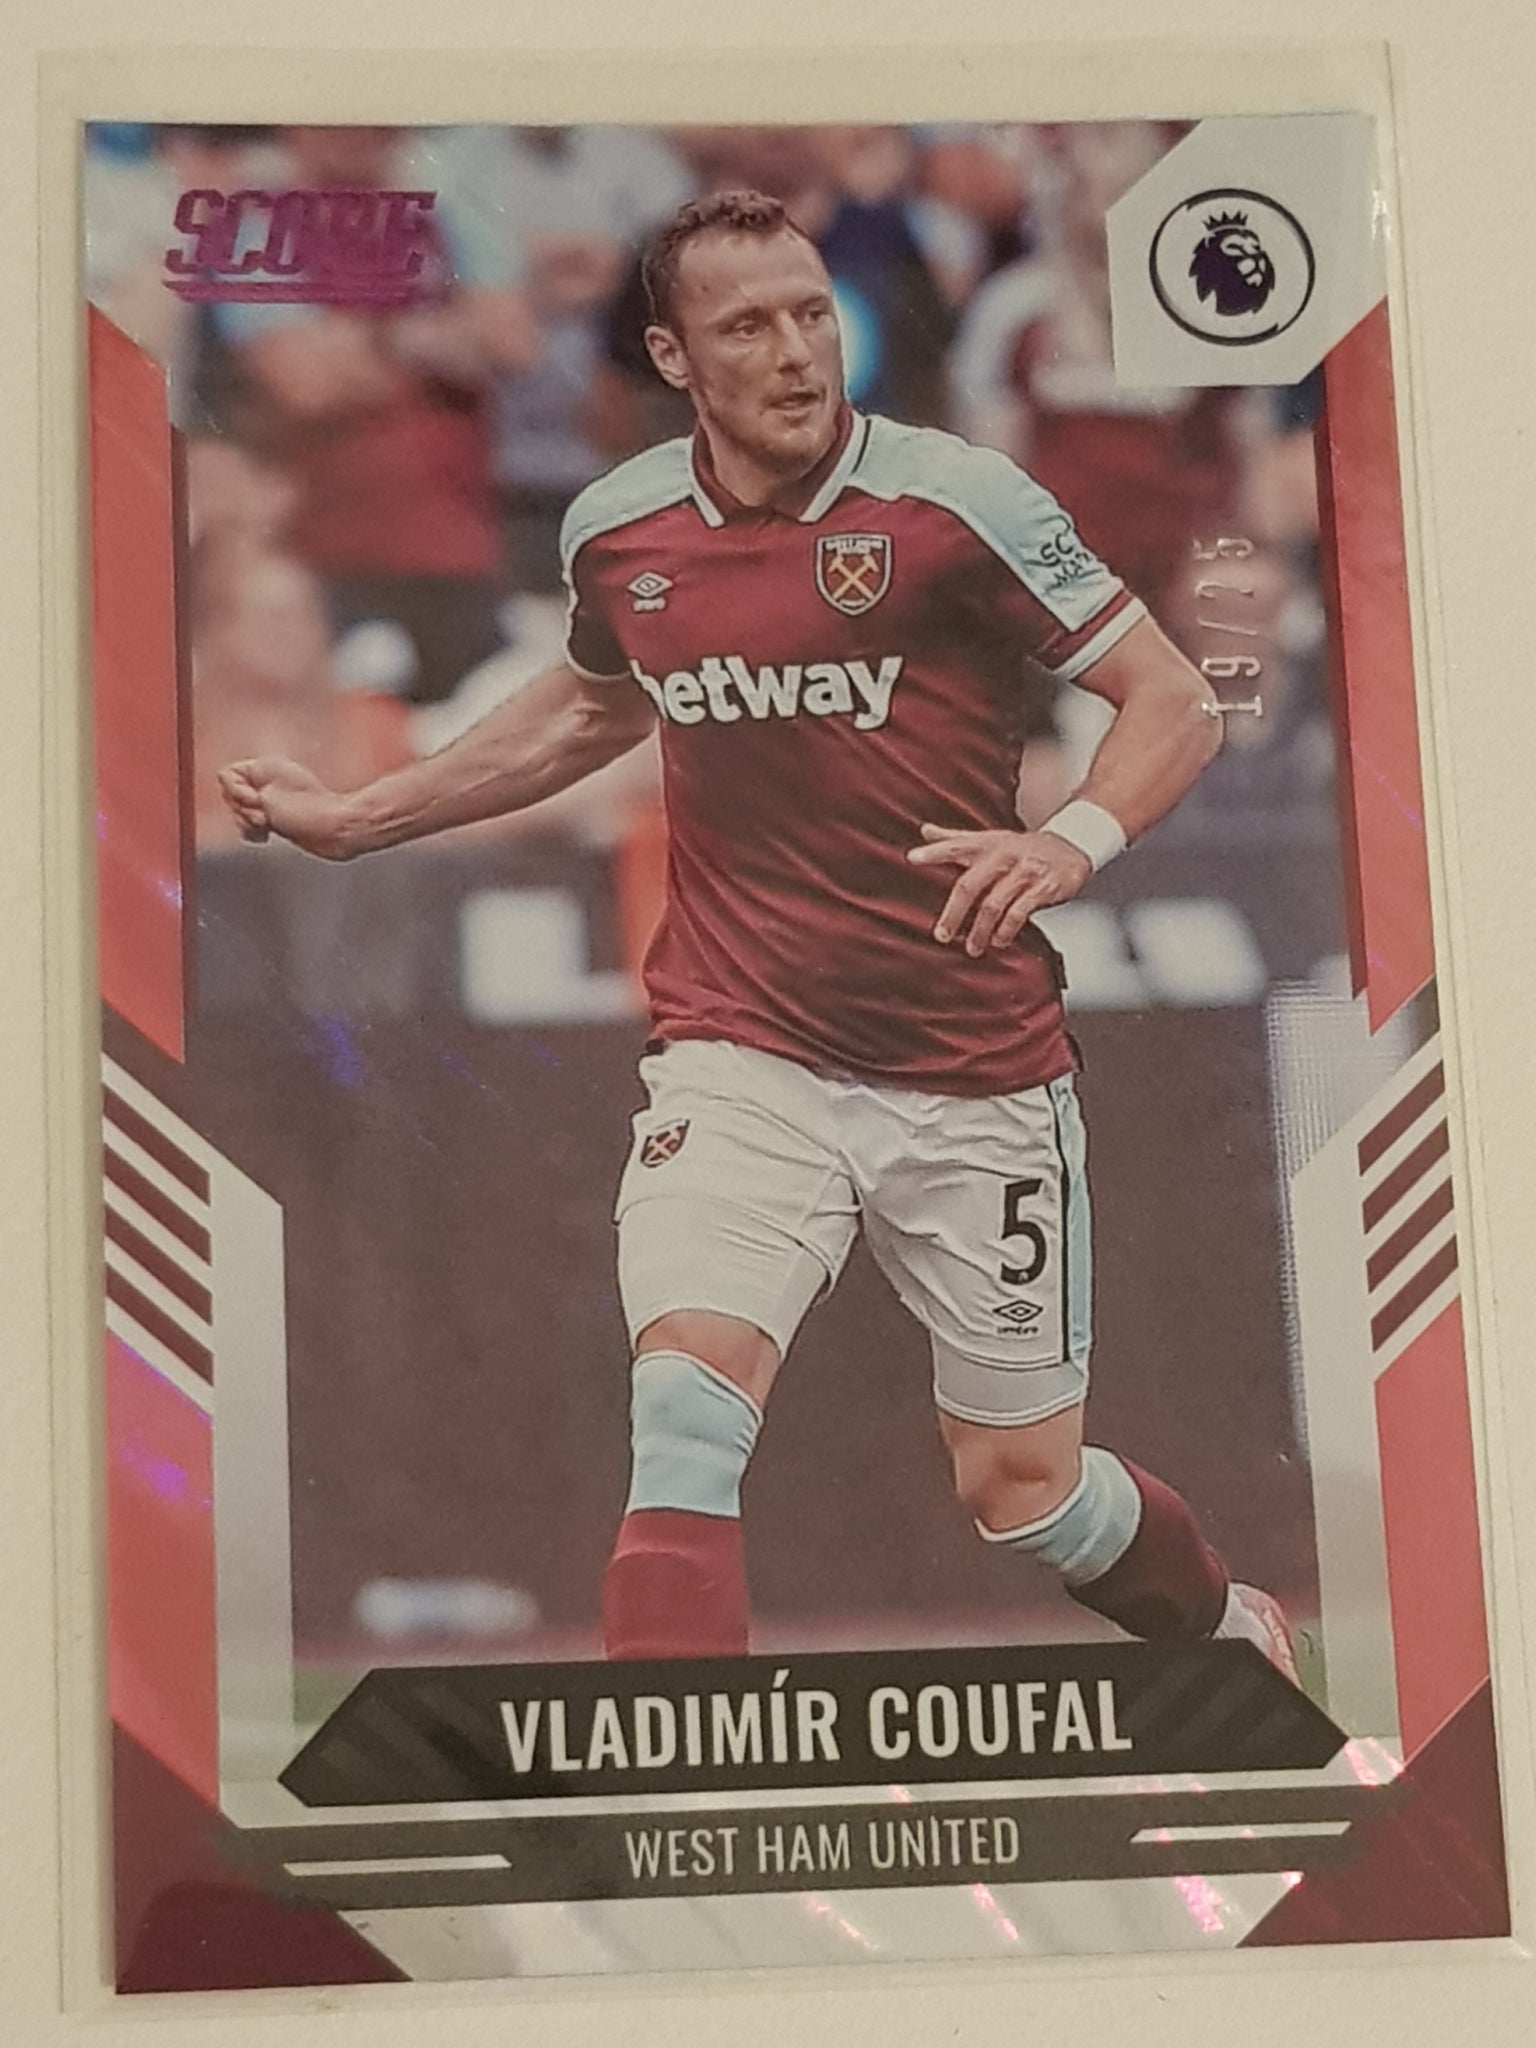 2021-22 Panini Score Premier League Vladimir Coufal #143 Pink Lava Parallel /25 Trading Card